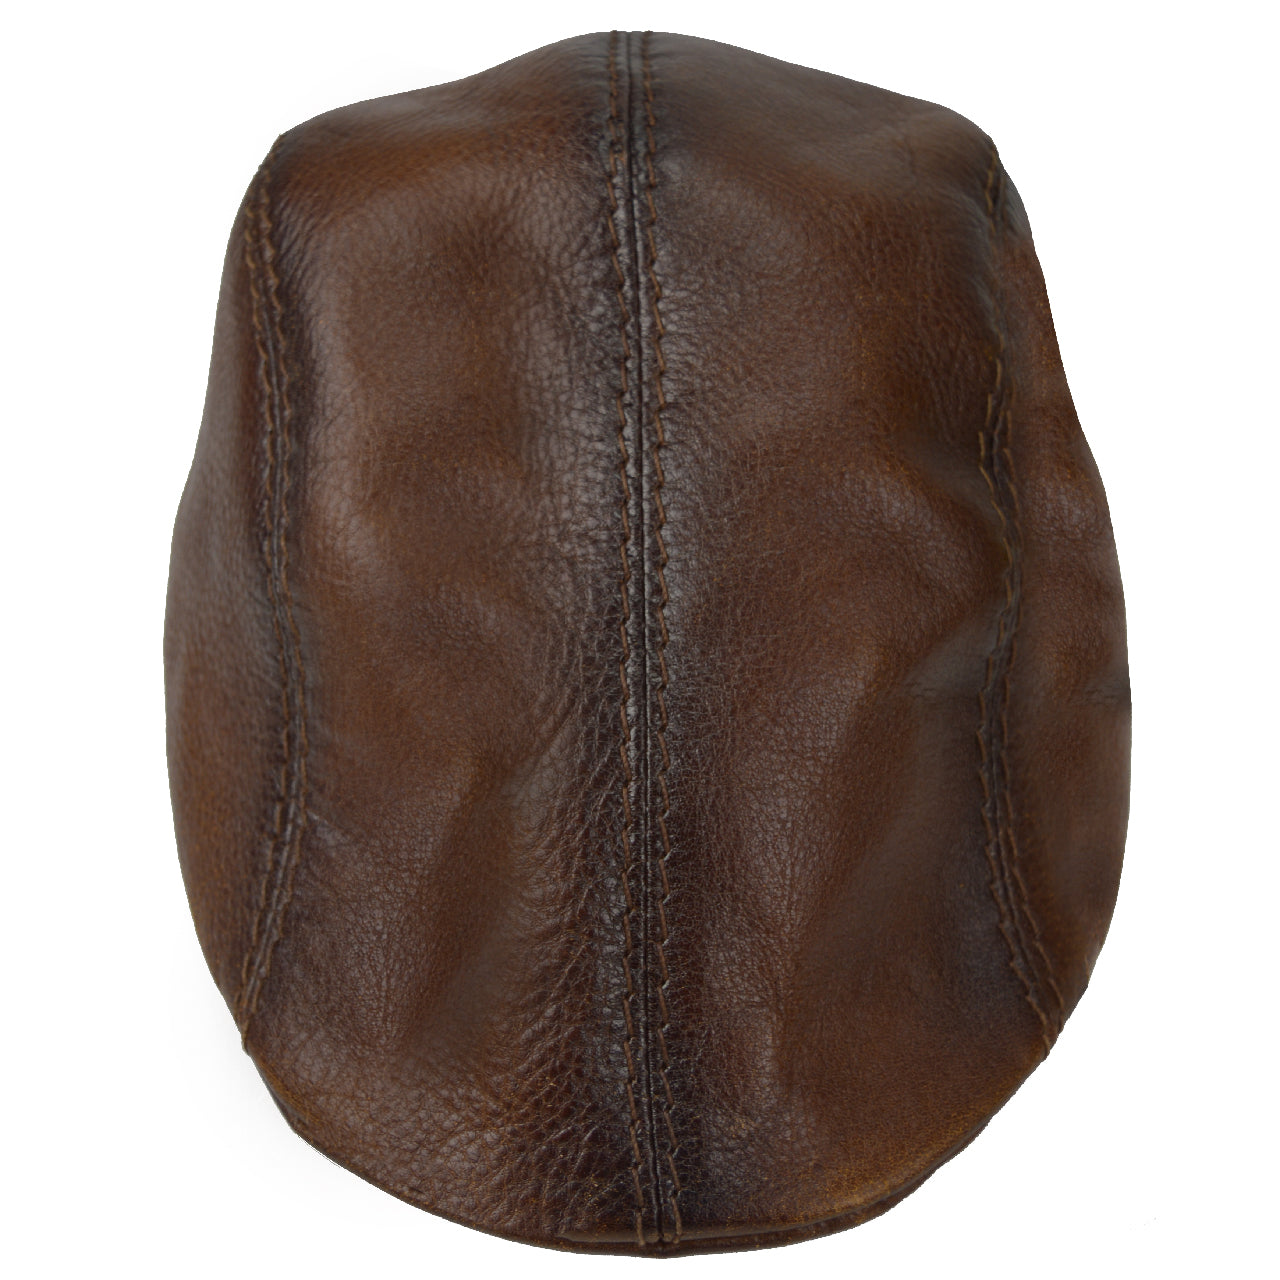 Pratesi Coppola Brunelleschi B041 (59cm) in genuine Italian leather